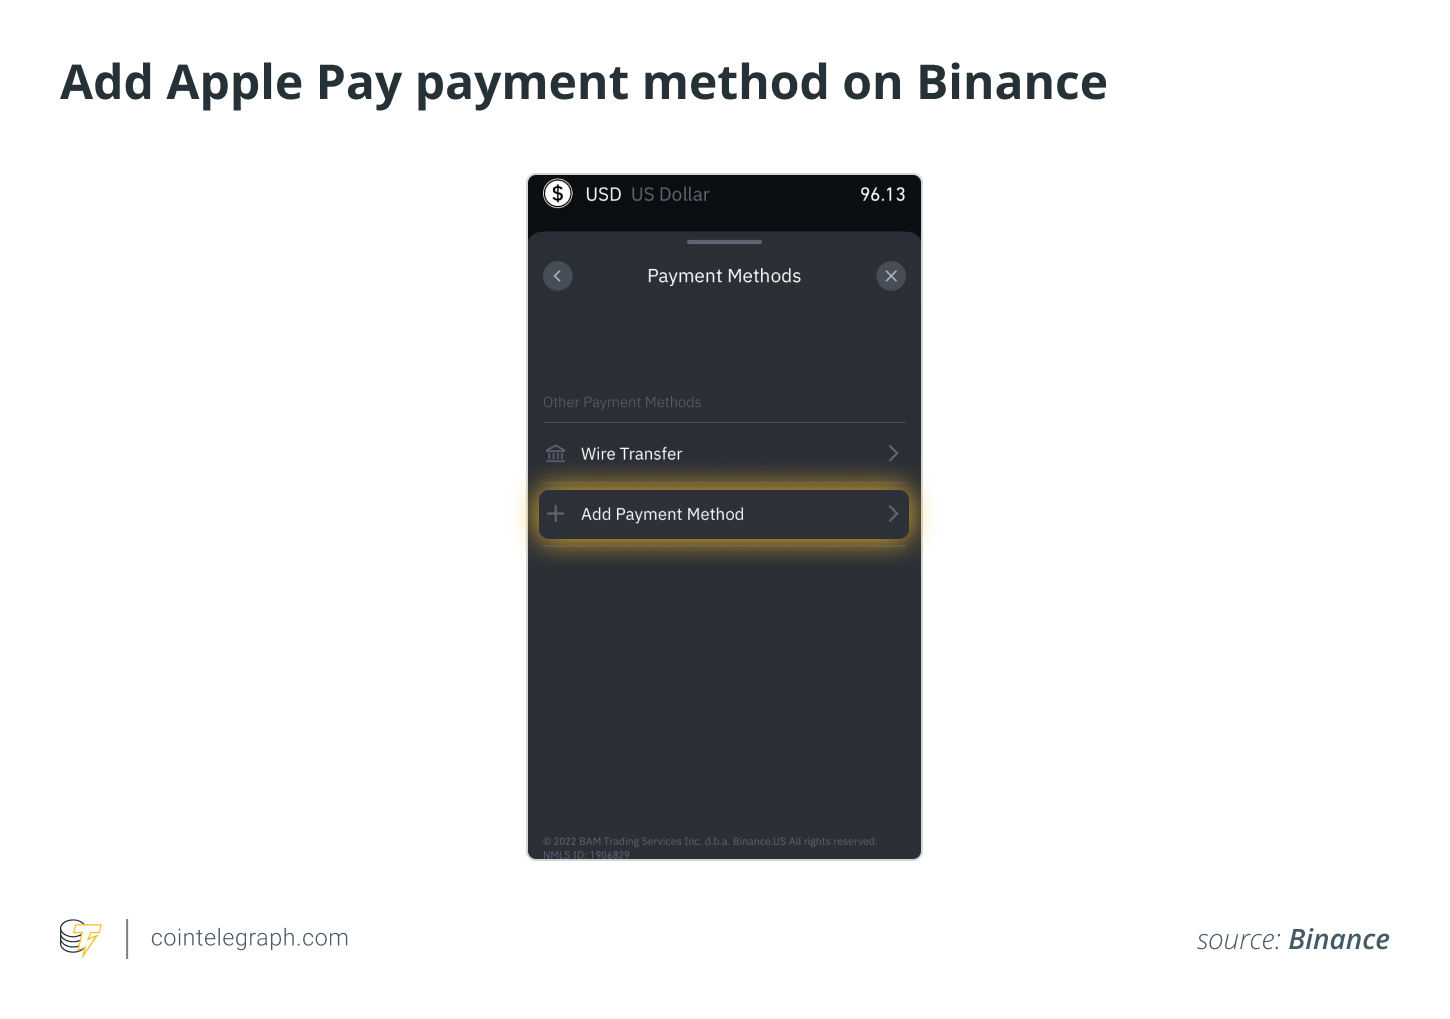 Add Apple Pay Payment Method on Binance